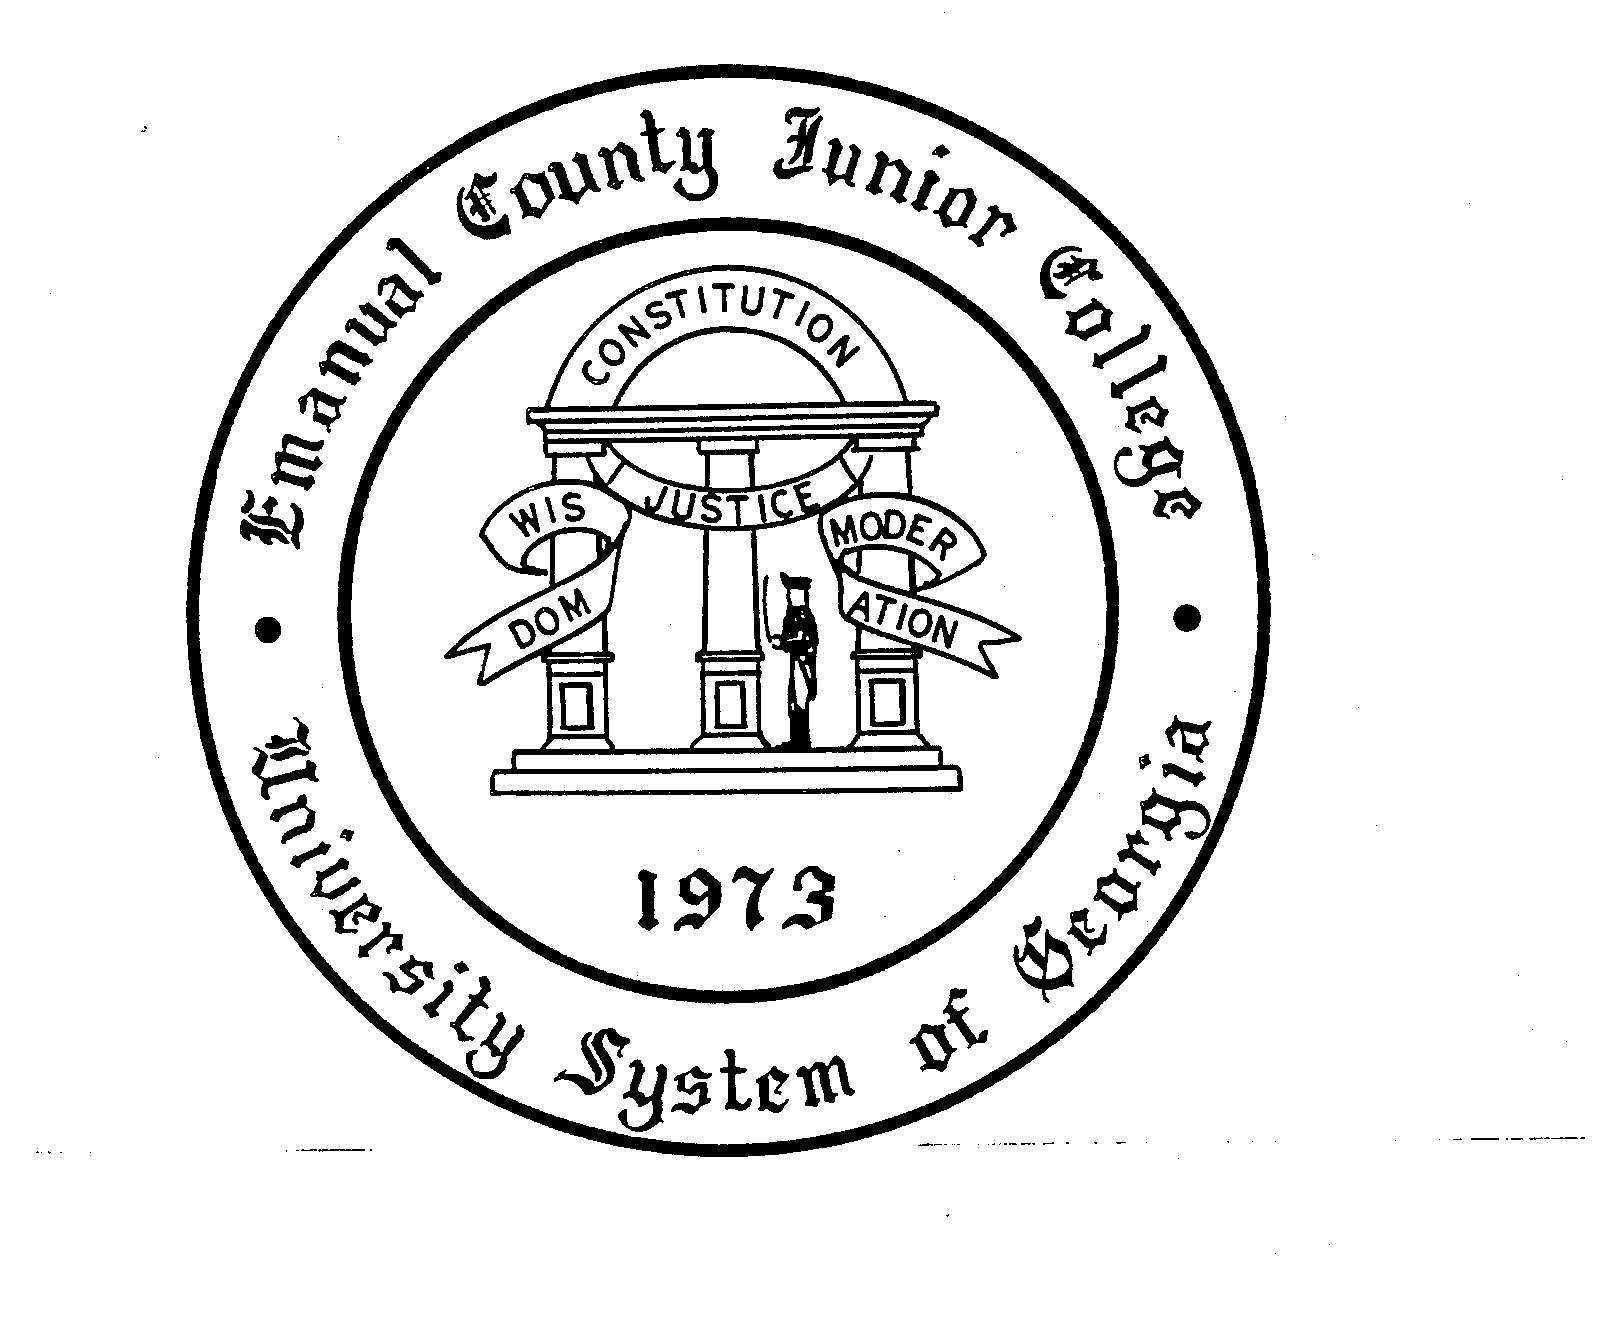  EMANUAL COUNTY JUNIOR COLLEGE UNIVERSITY SYSTEM OF GEORGIA 1973